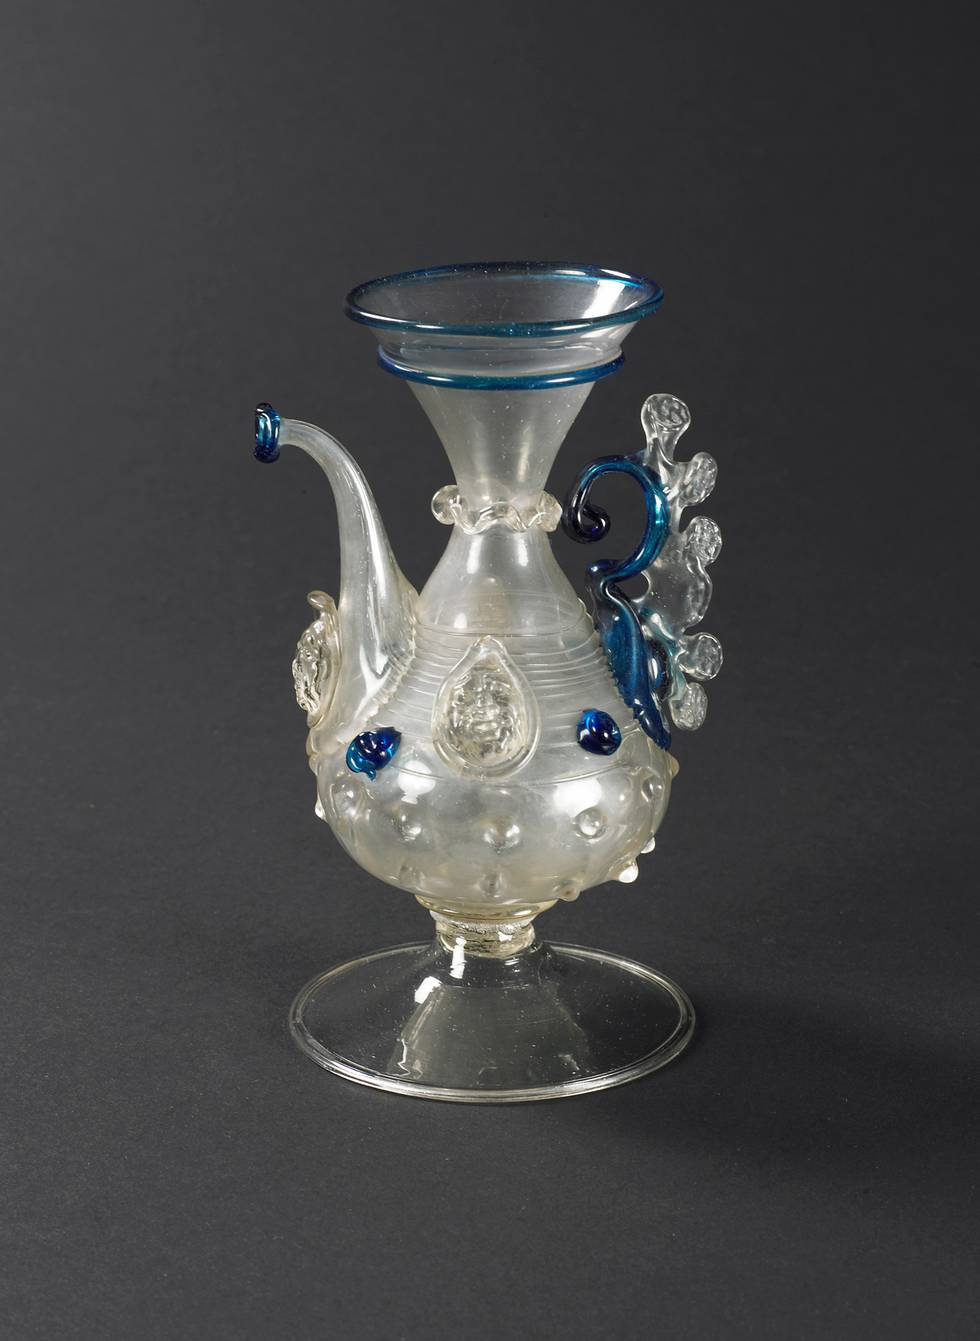 Photograph of a blue patterned Venetian glass vessel